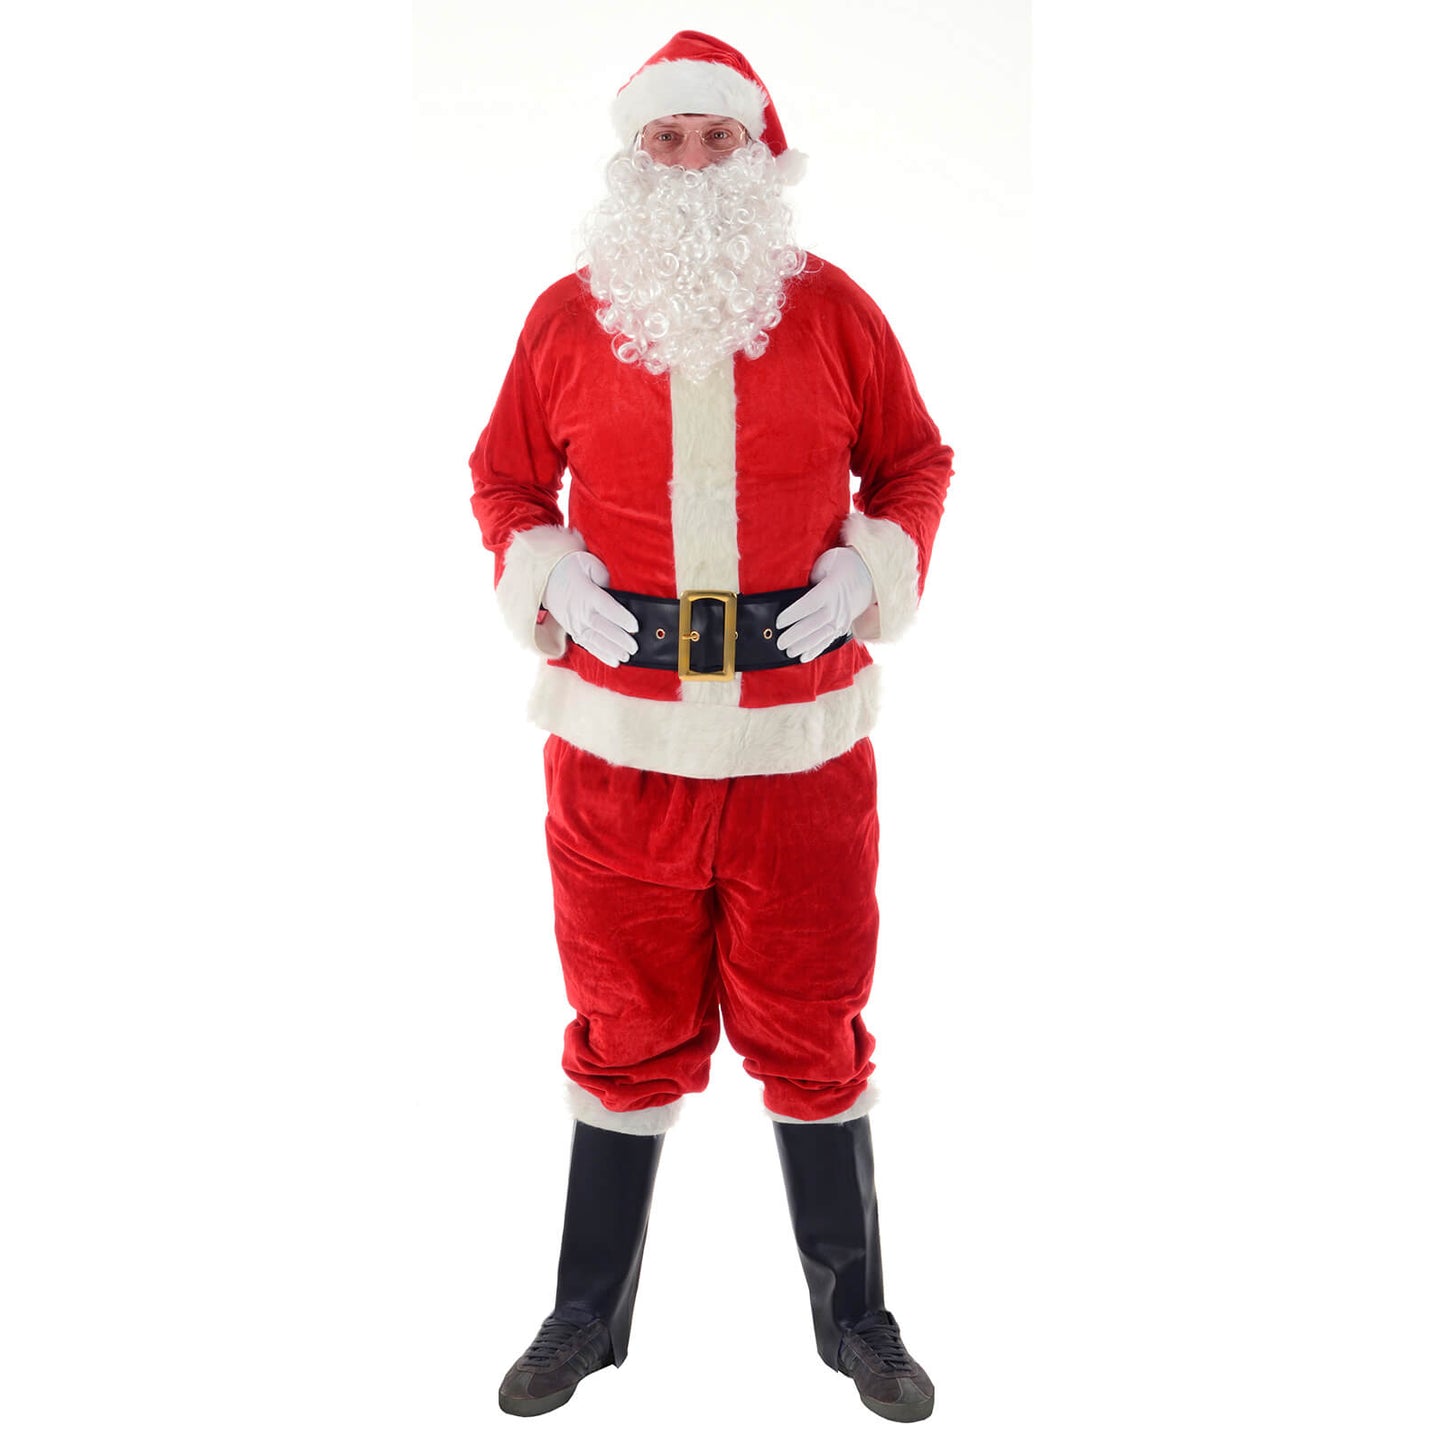 Buy 8pc Deluxe Santa Suit Christmas Costume